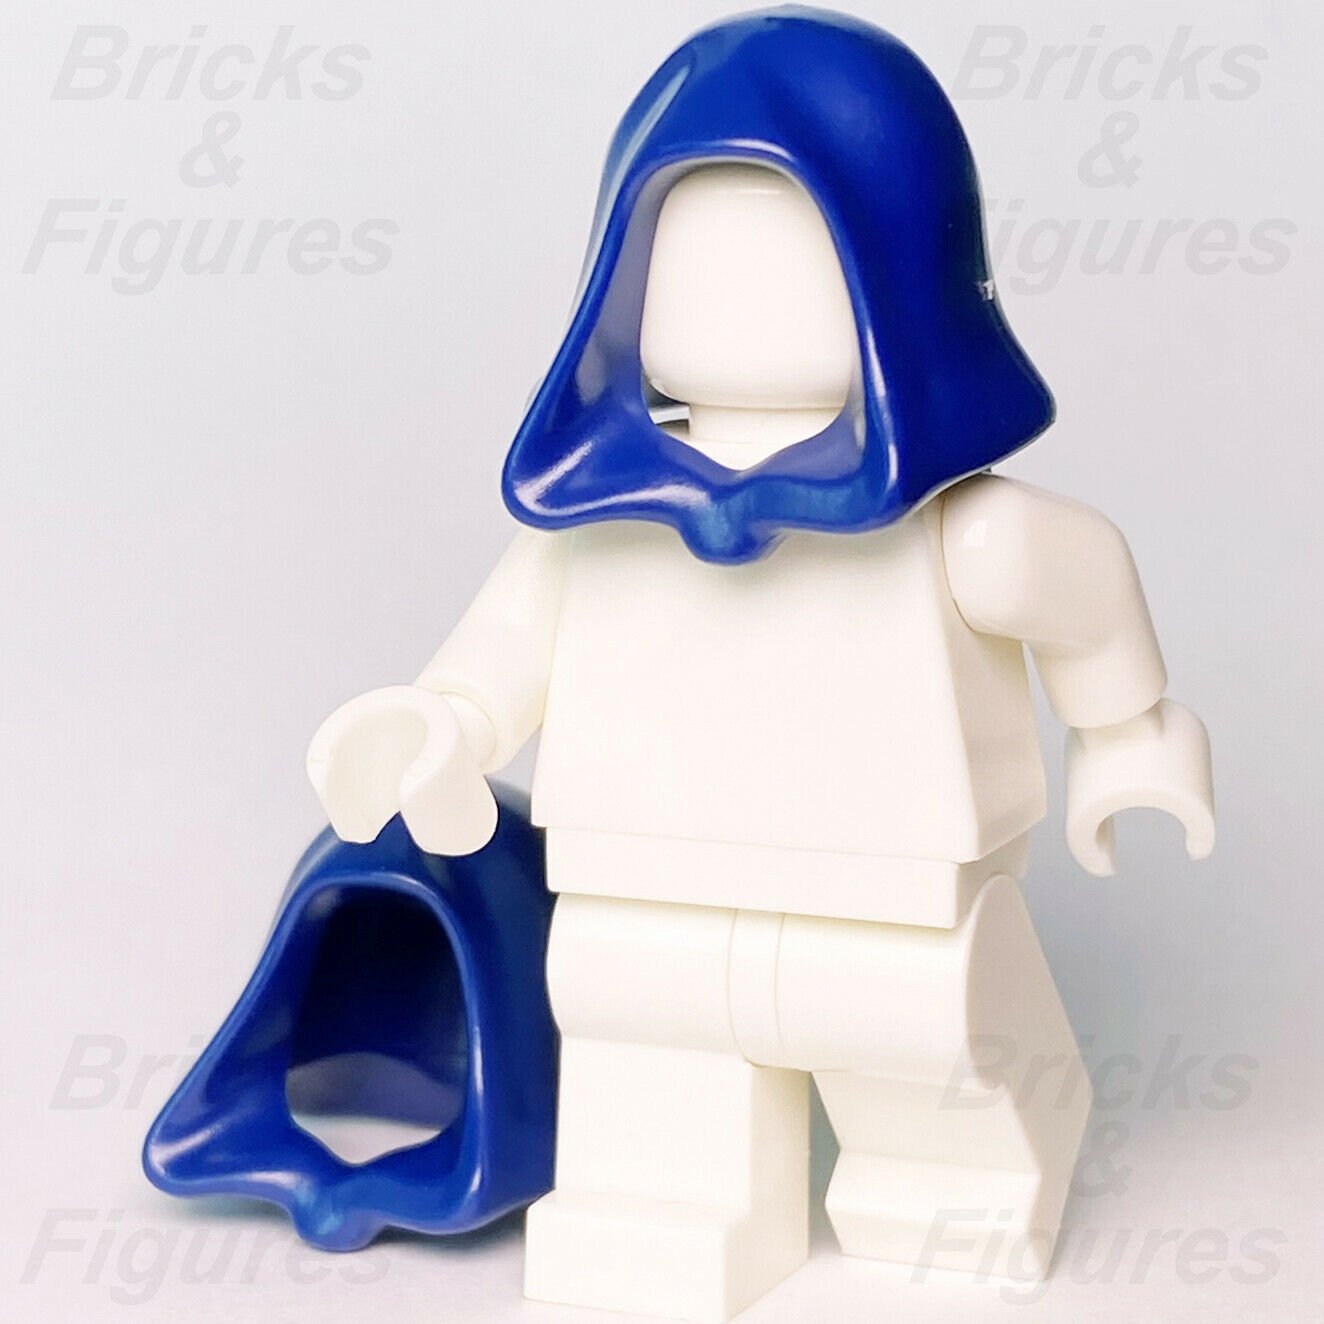 2 x Star Wars LEGO Dark Blue Robe Hoods Minifigure Headgear Parts 30381 96232 - Bricks & Figures